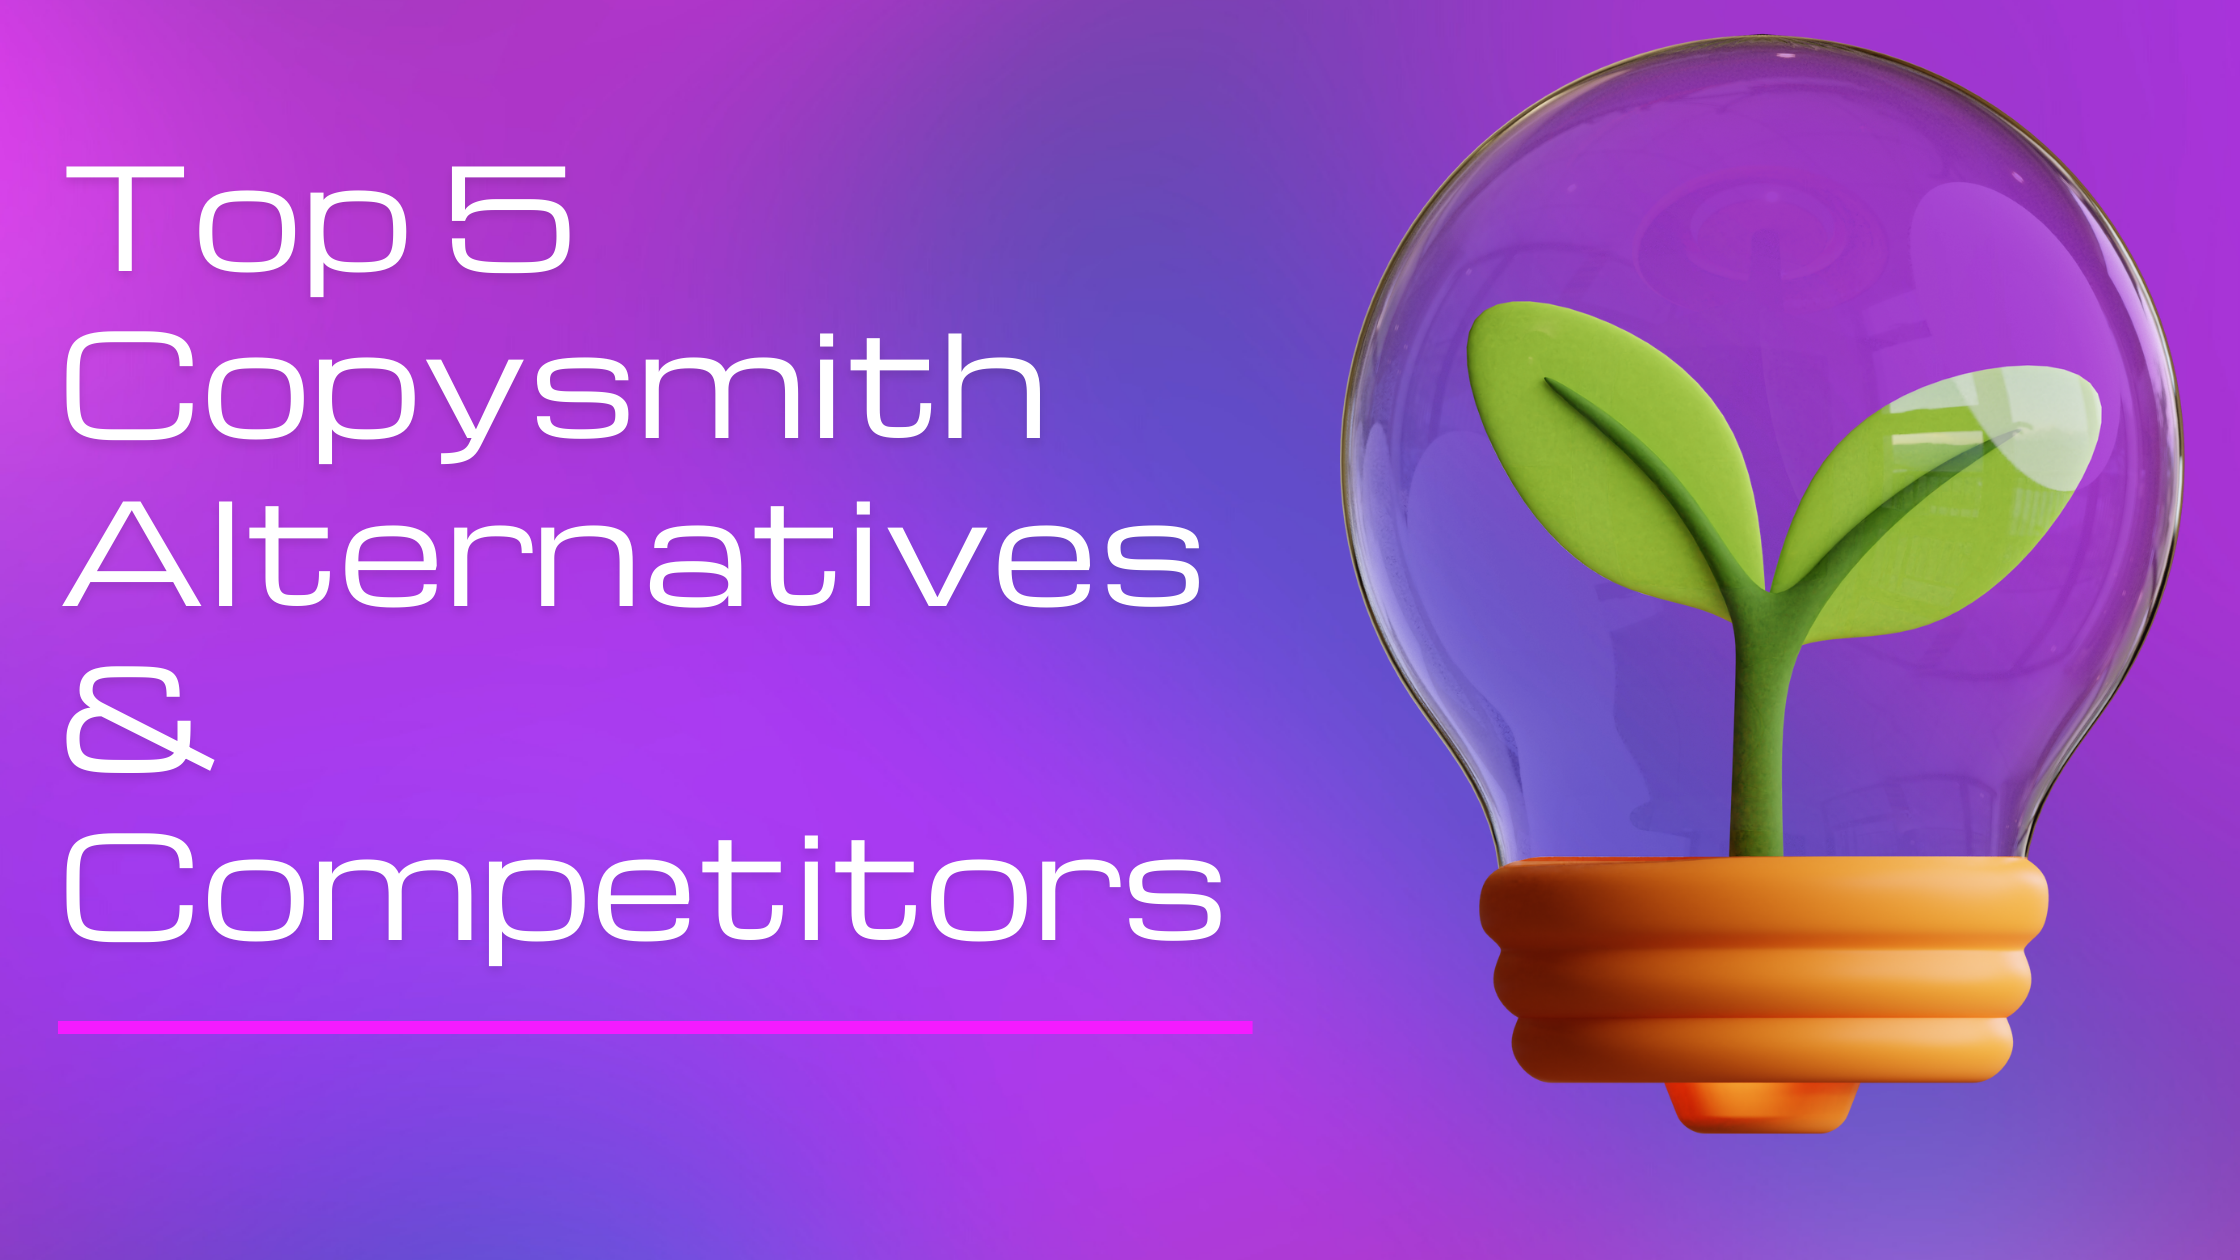 Top 5 Copysmith Alternatives & Competitors